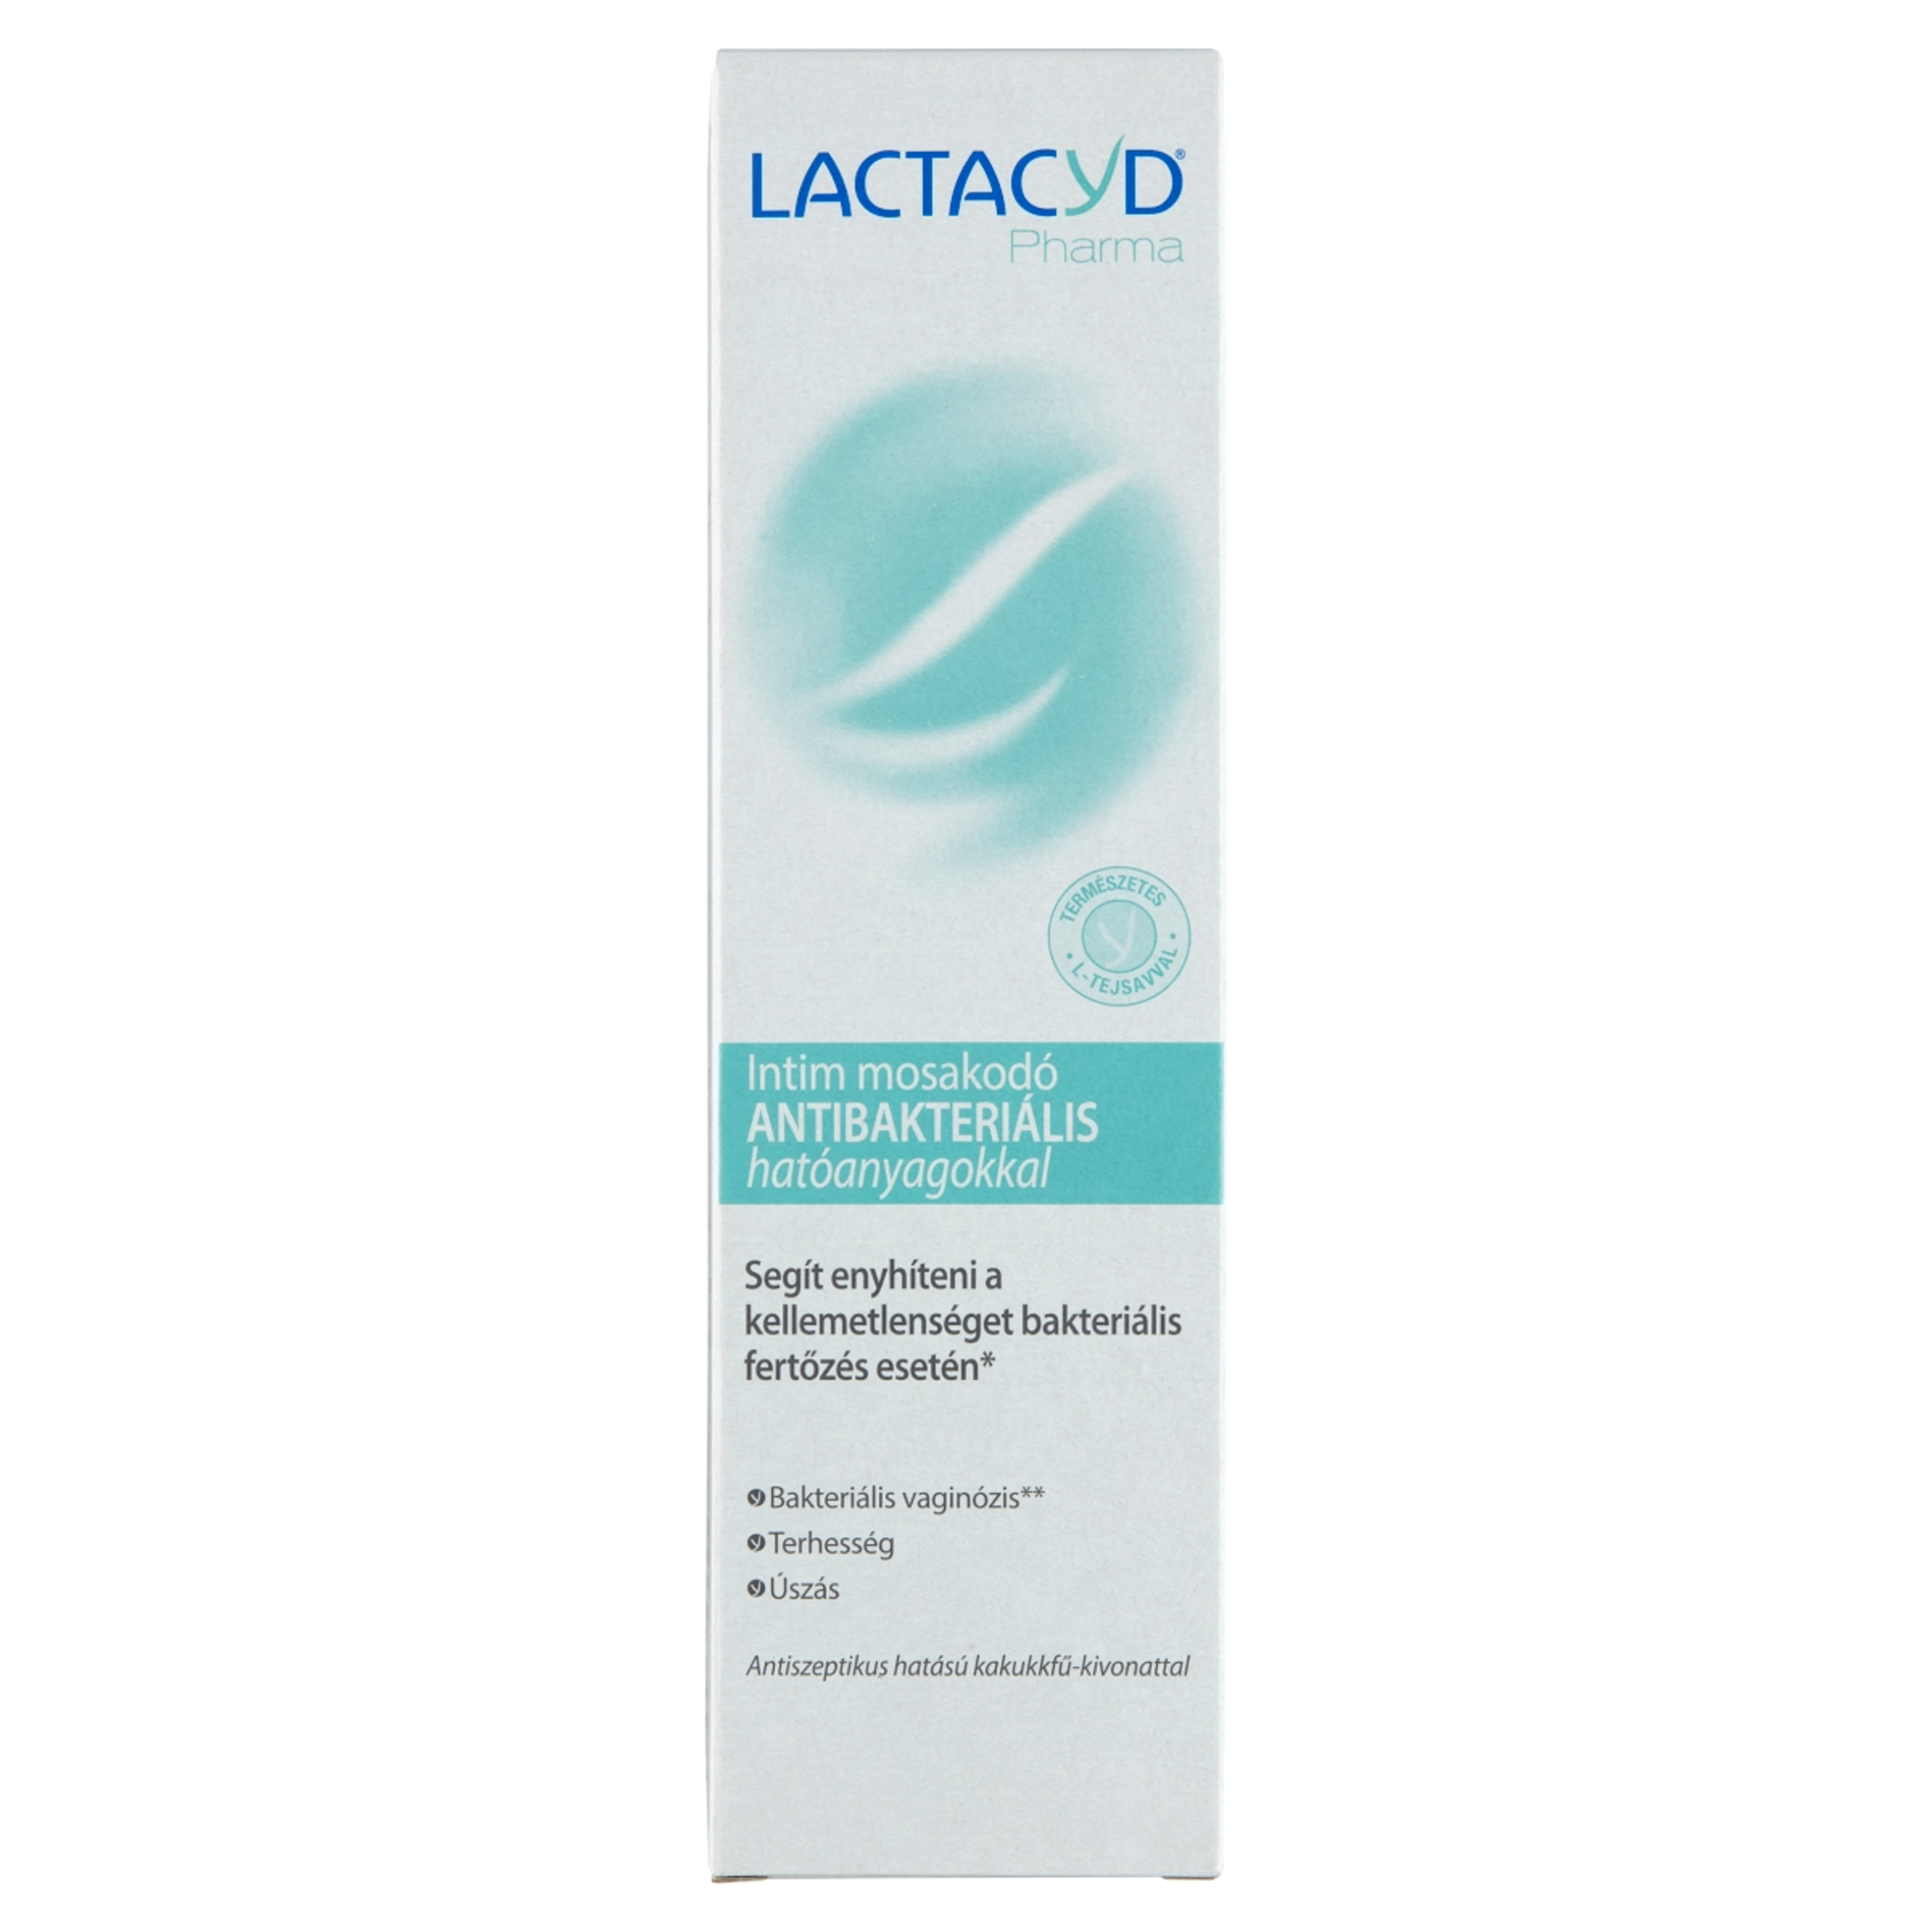 Lactacyd Pharma intim mosakodó - 1 db-1